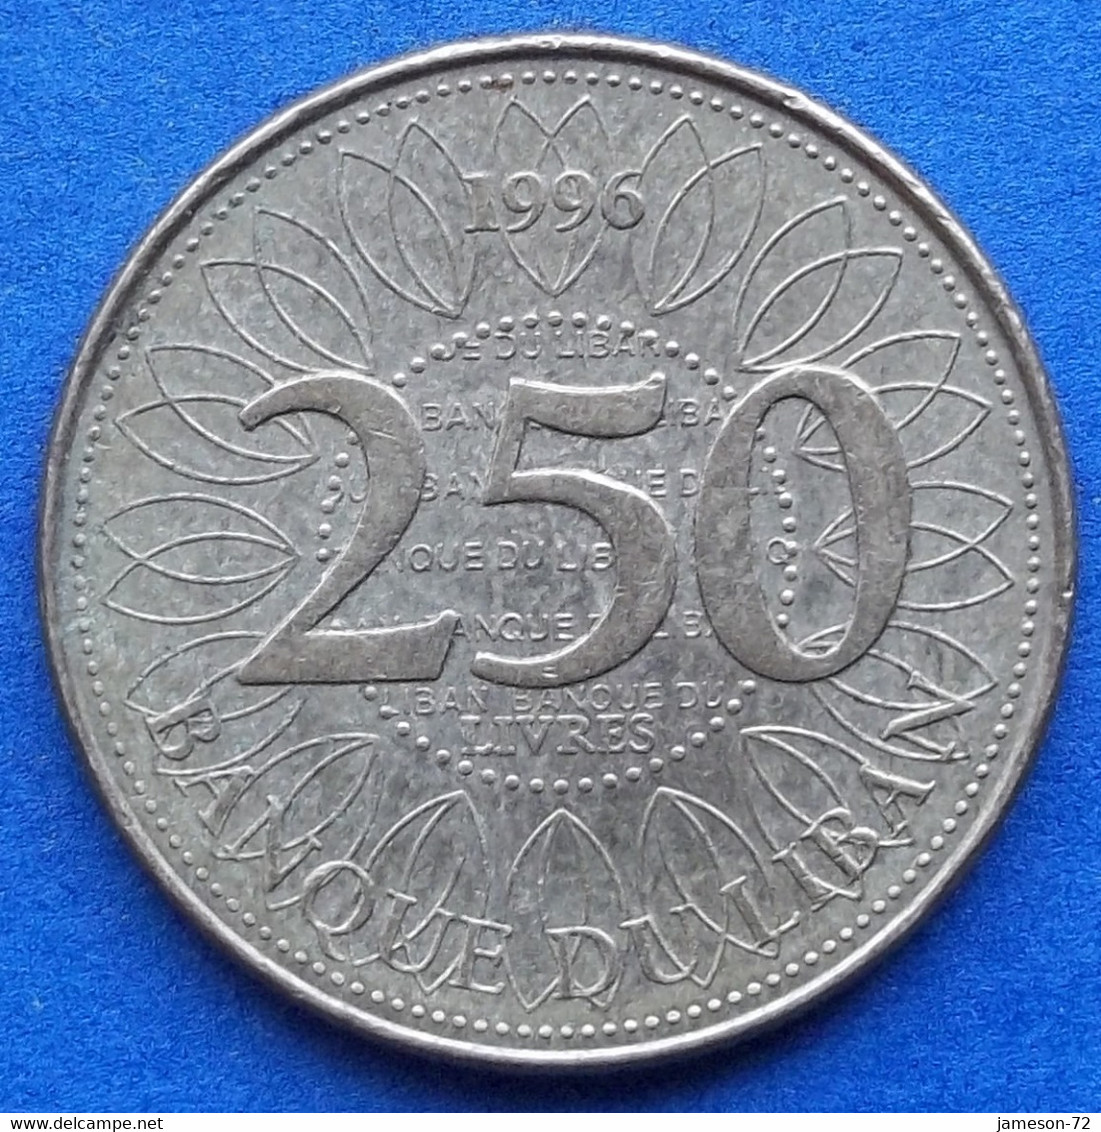 LEBANON - 250 Livres 1996 KM# 36 Independent Republic - Edelweiss Coins - Lebanon